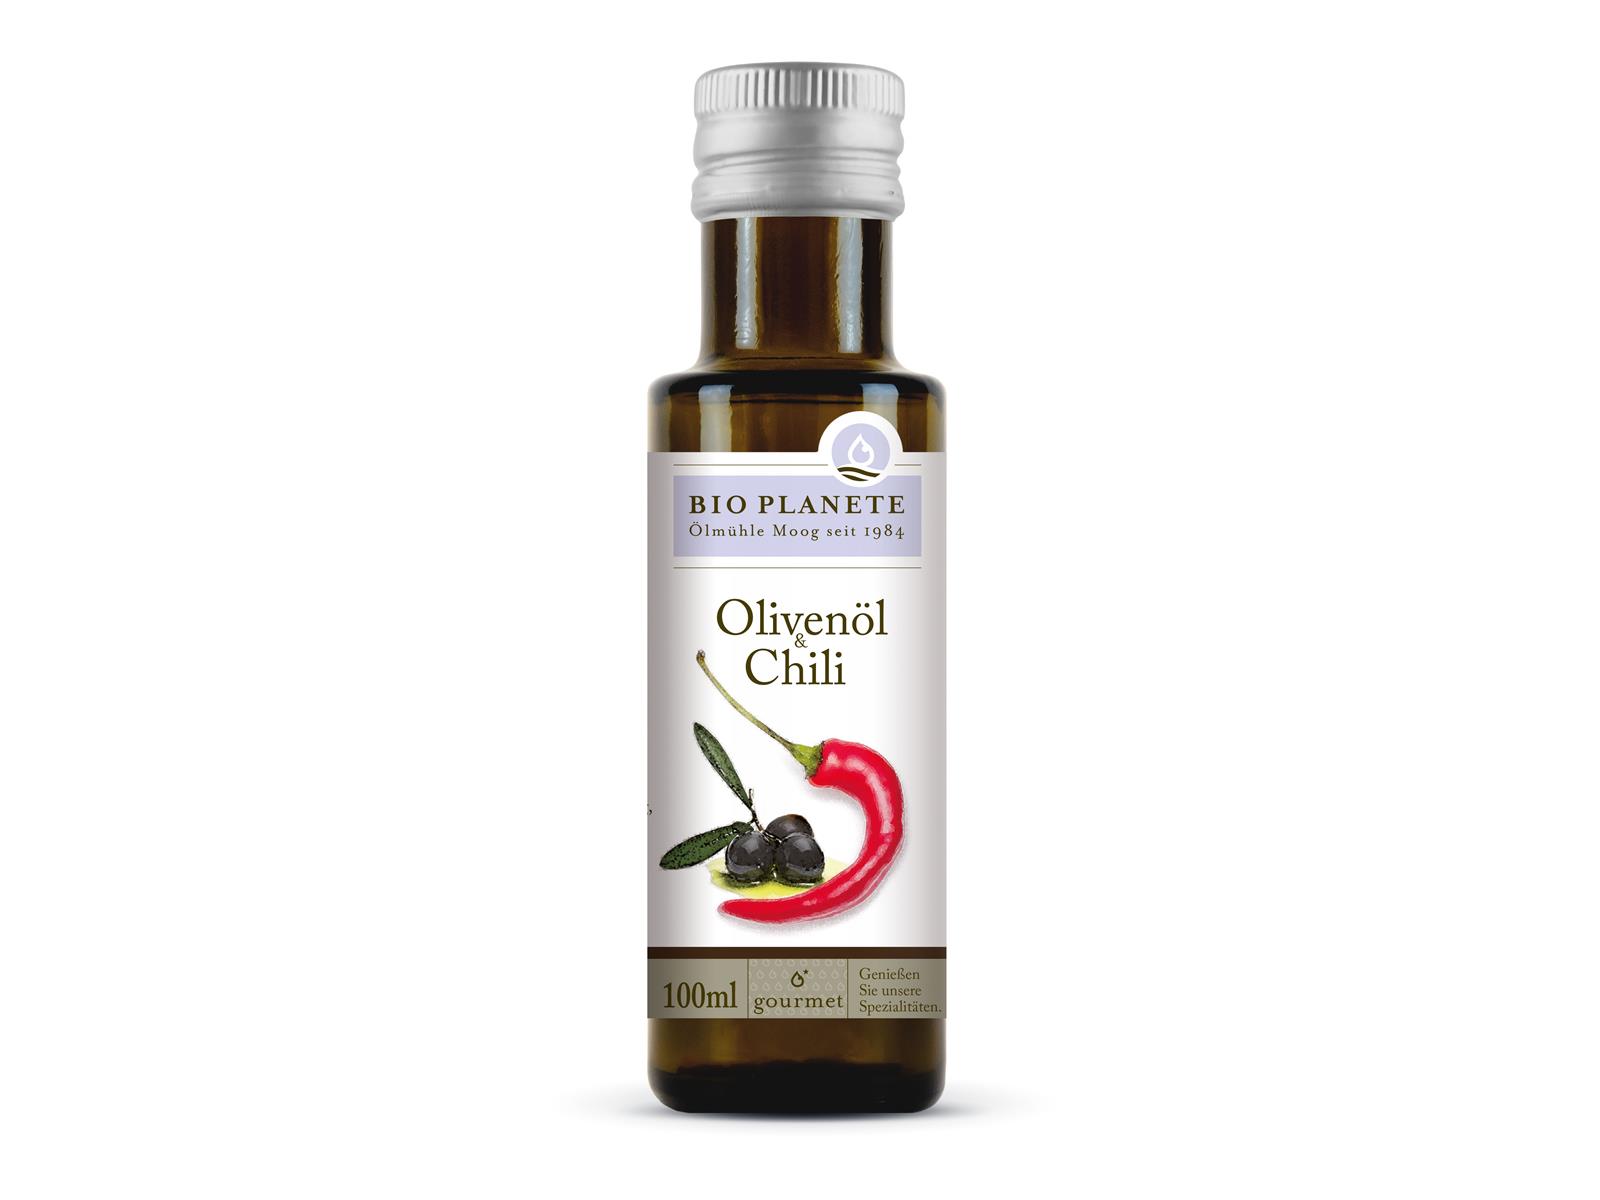 Bio Planète Olivenöl & Chili 100 ml